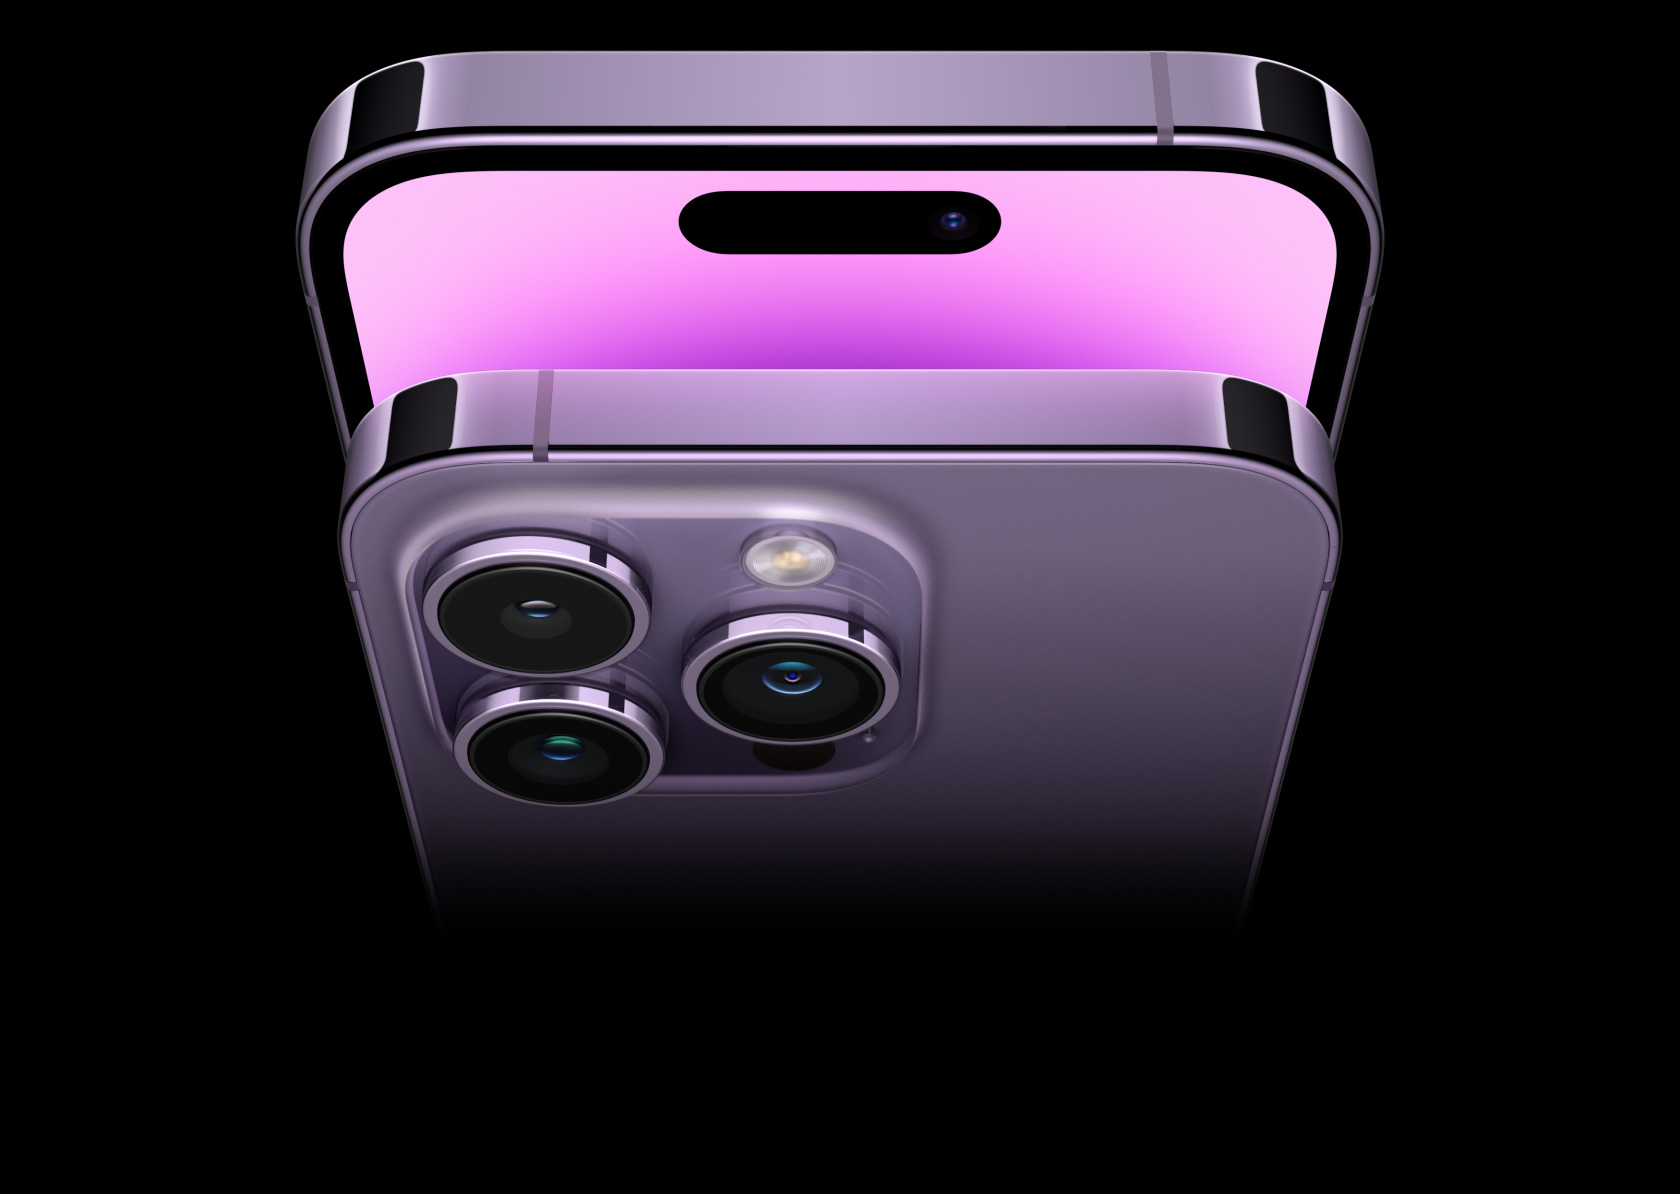 iphone 14 pro deep purple